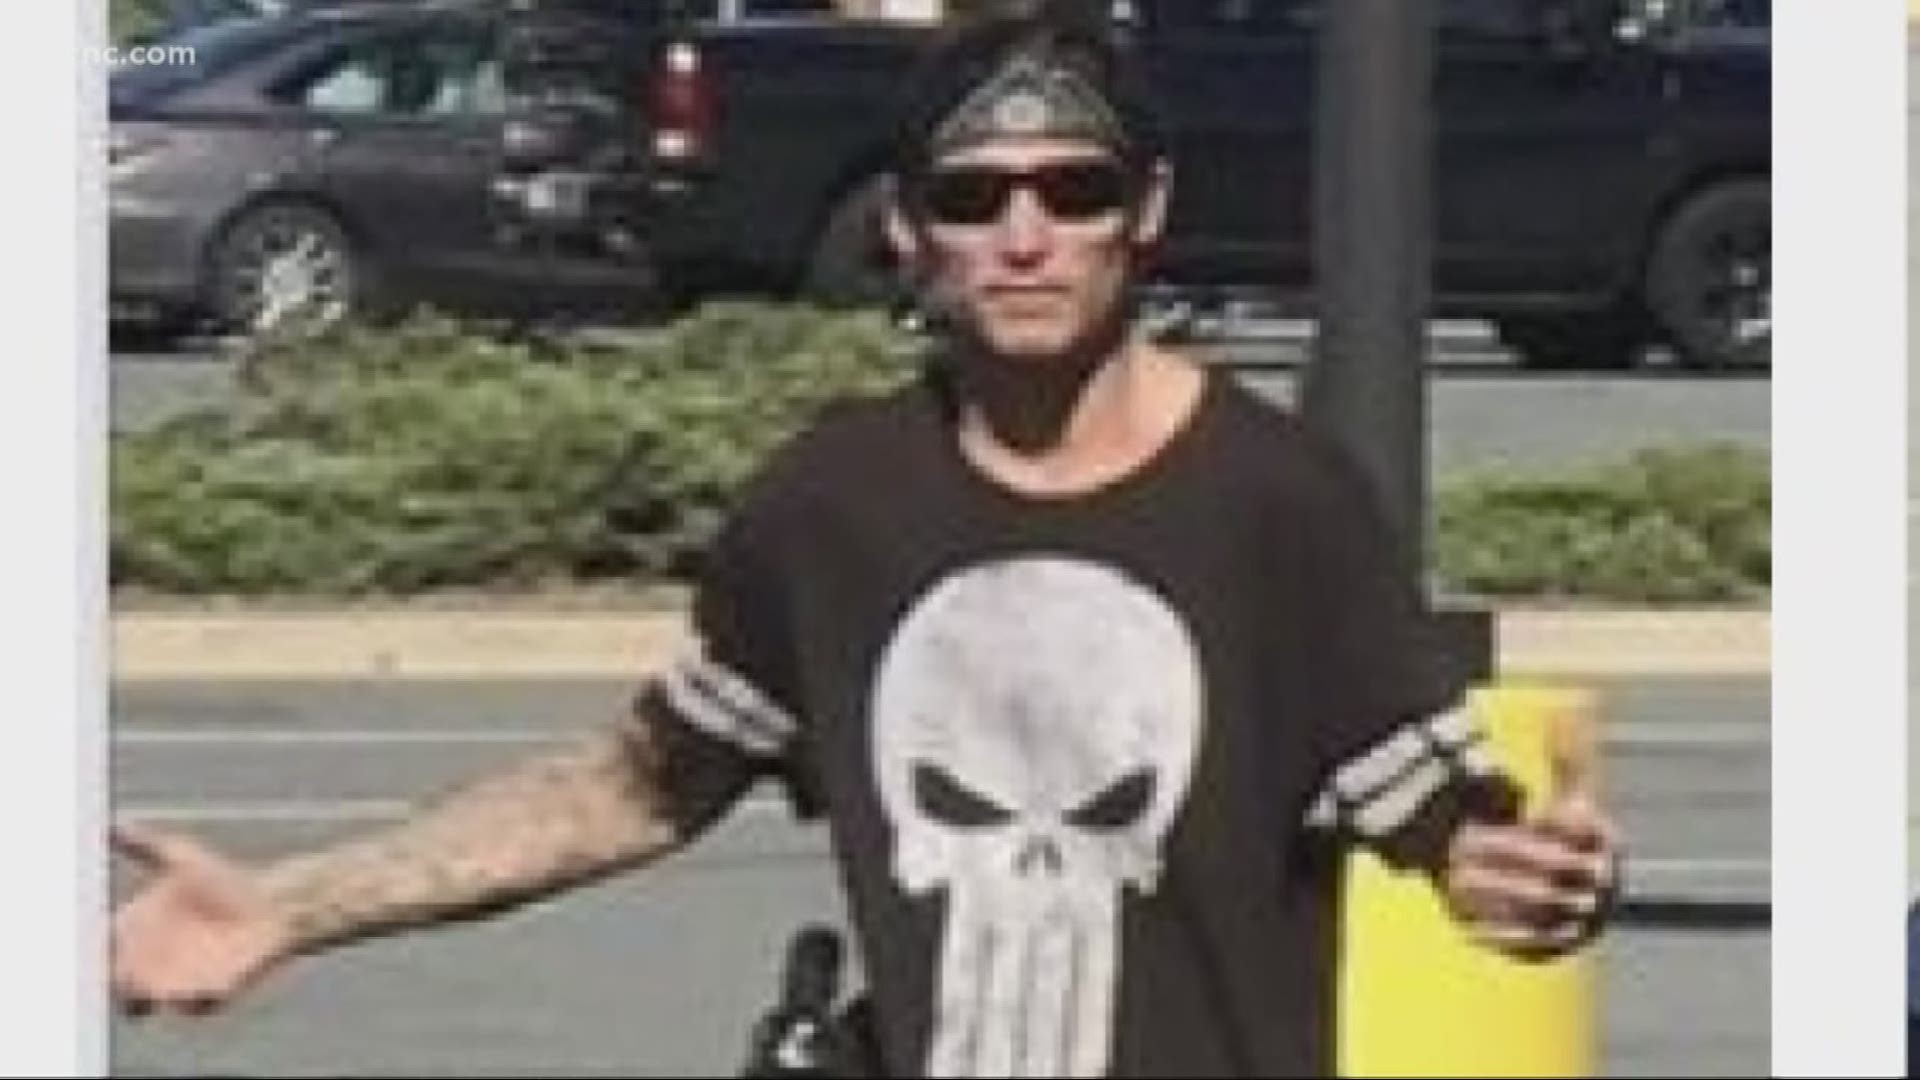 28-year-old Jason Wayne was arrested after communicating threats to Derek Partee.